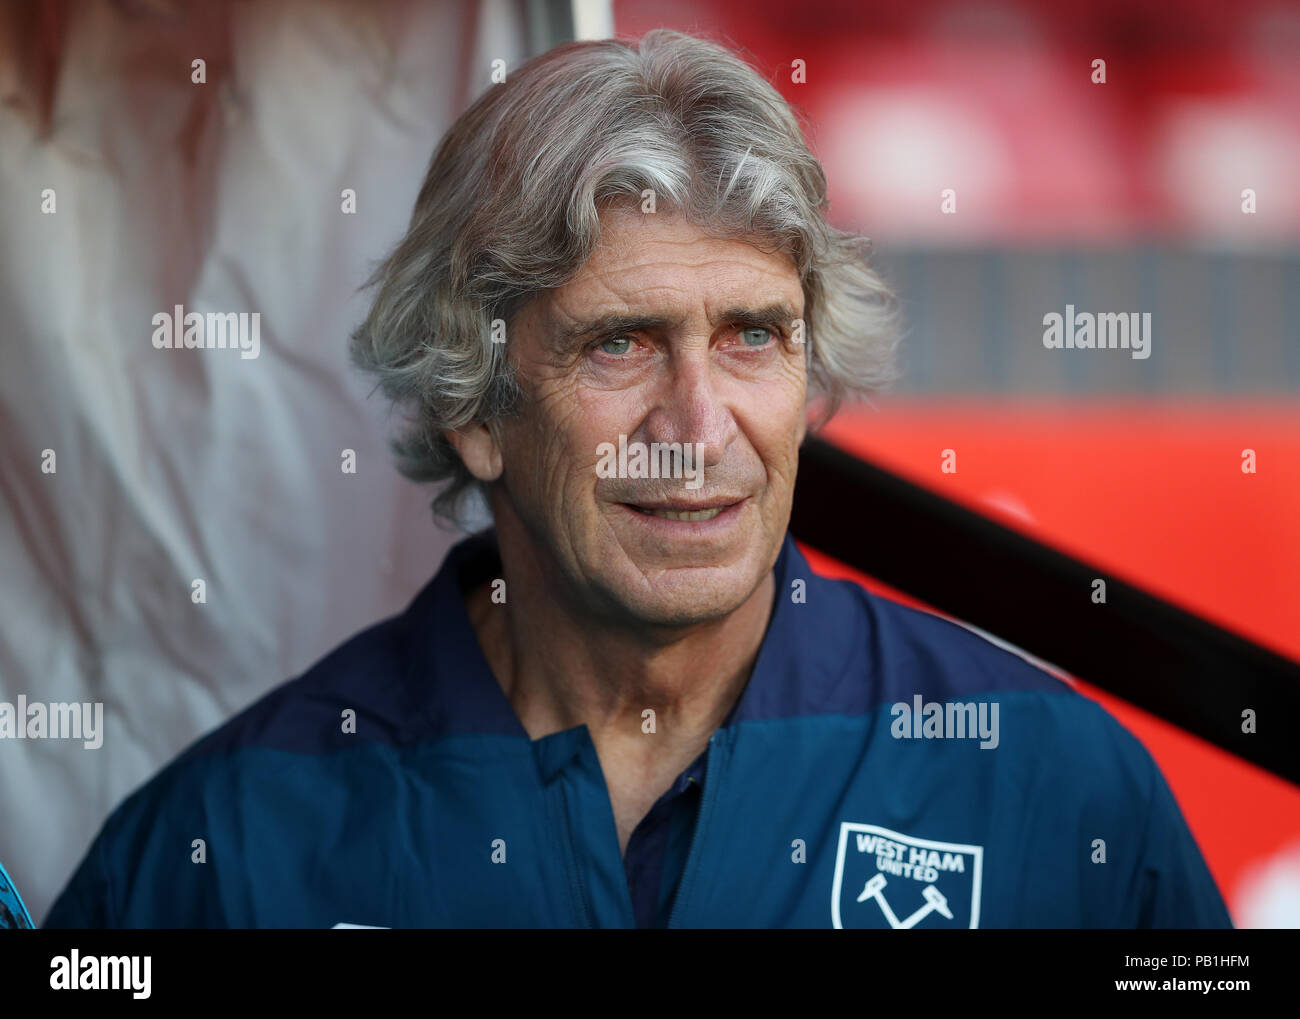 West Ham manager Manuel Pellegrini during a pre season friendly match at Villa Park, Birmingham. Stock Photo